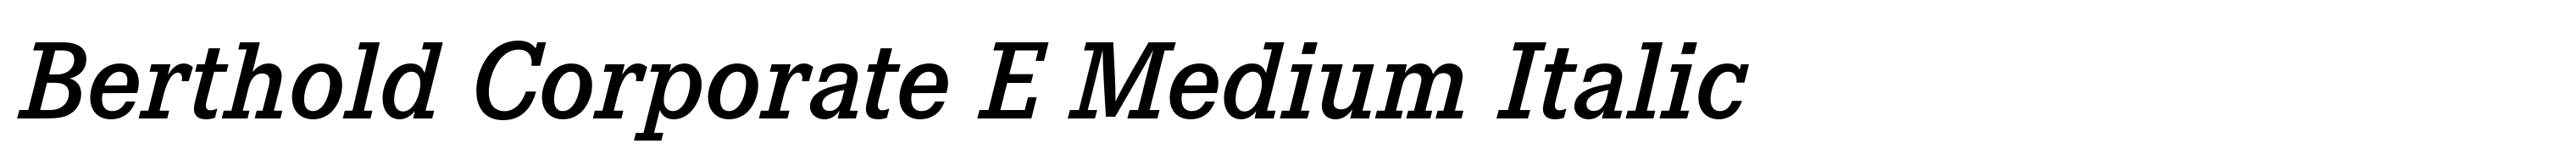 Berthold Corporate E Medium Italic